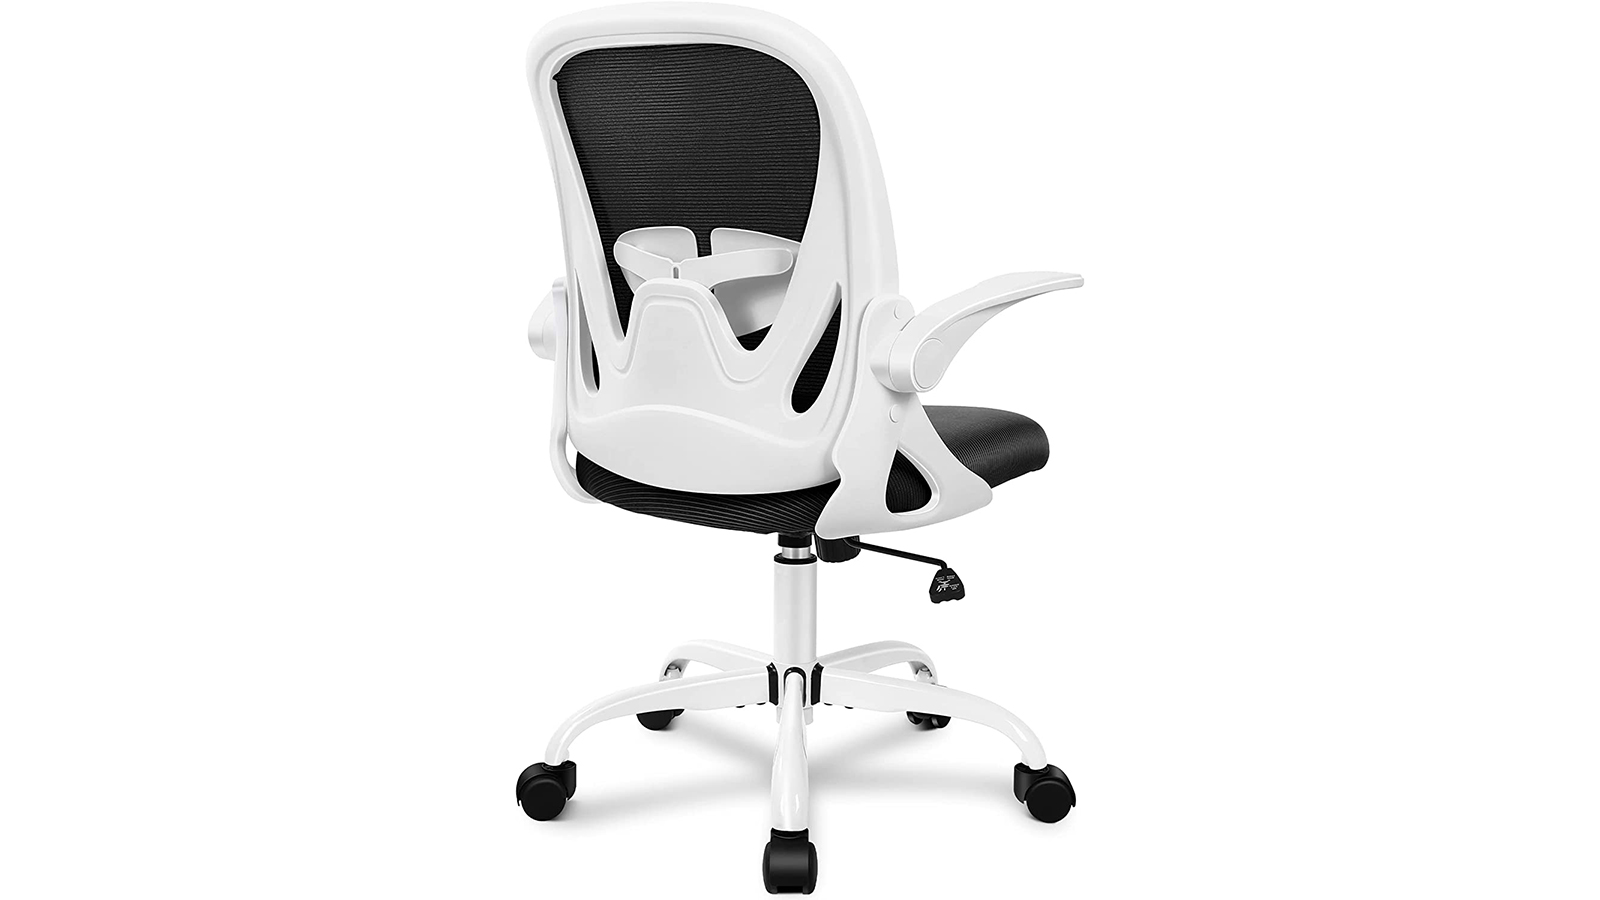 KERDOM Primy PR-934 Office Chair: Flip-up Arms